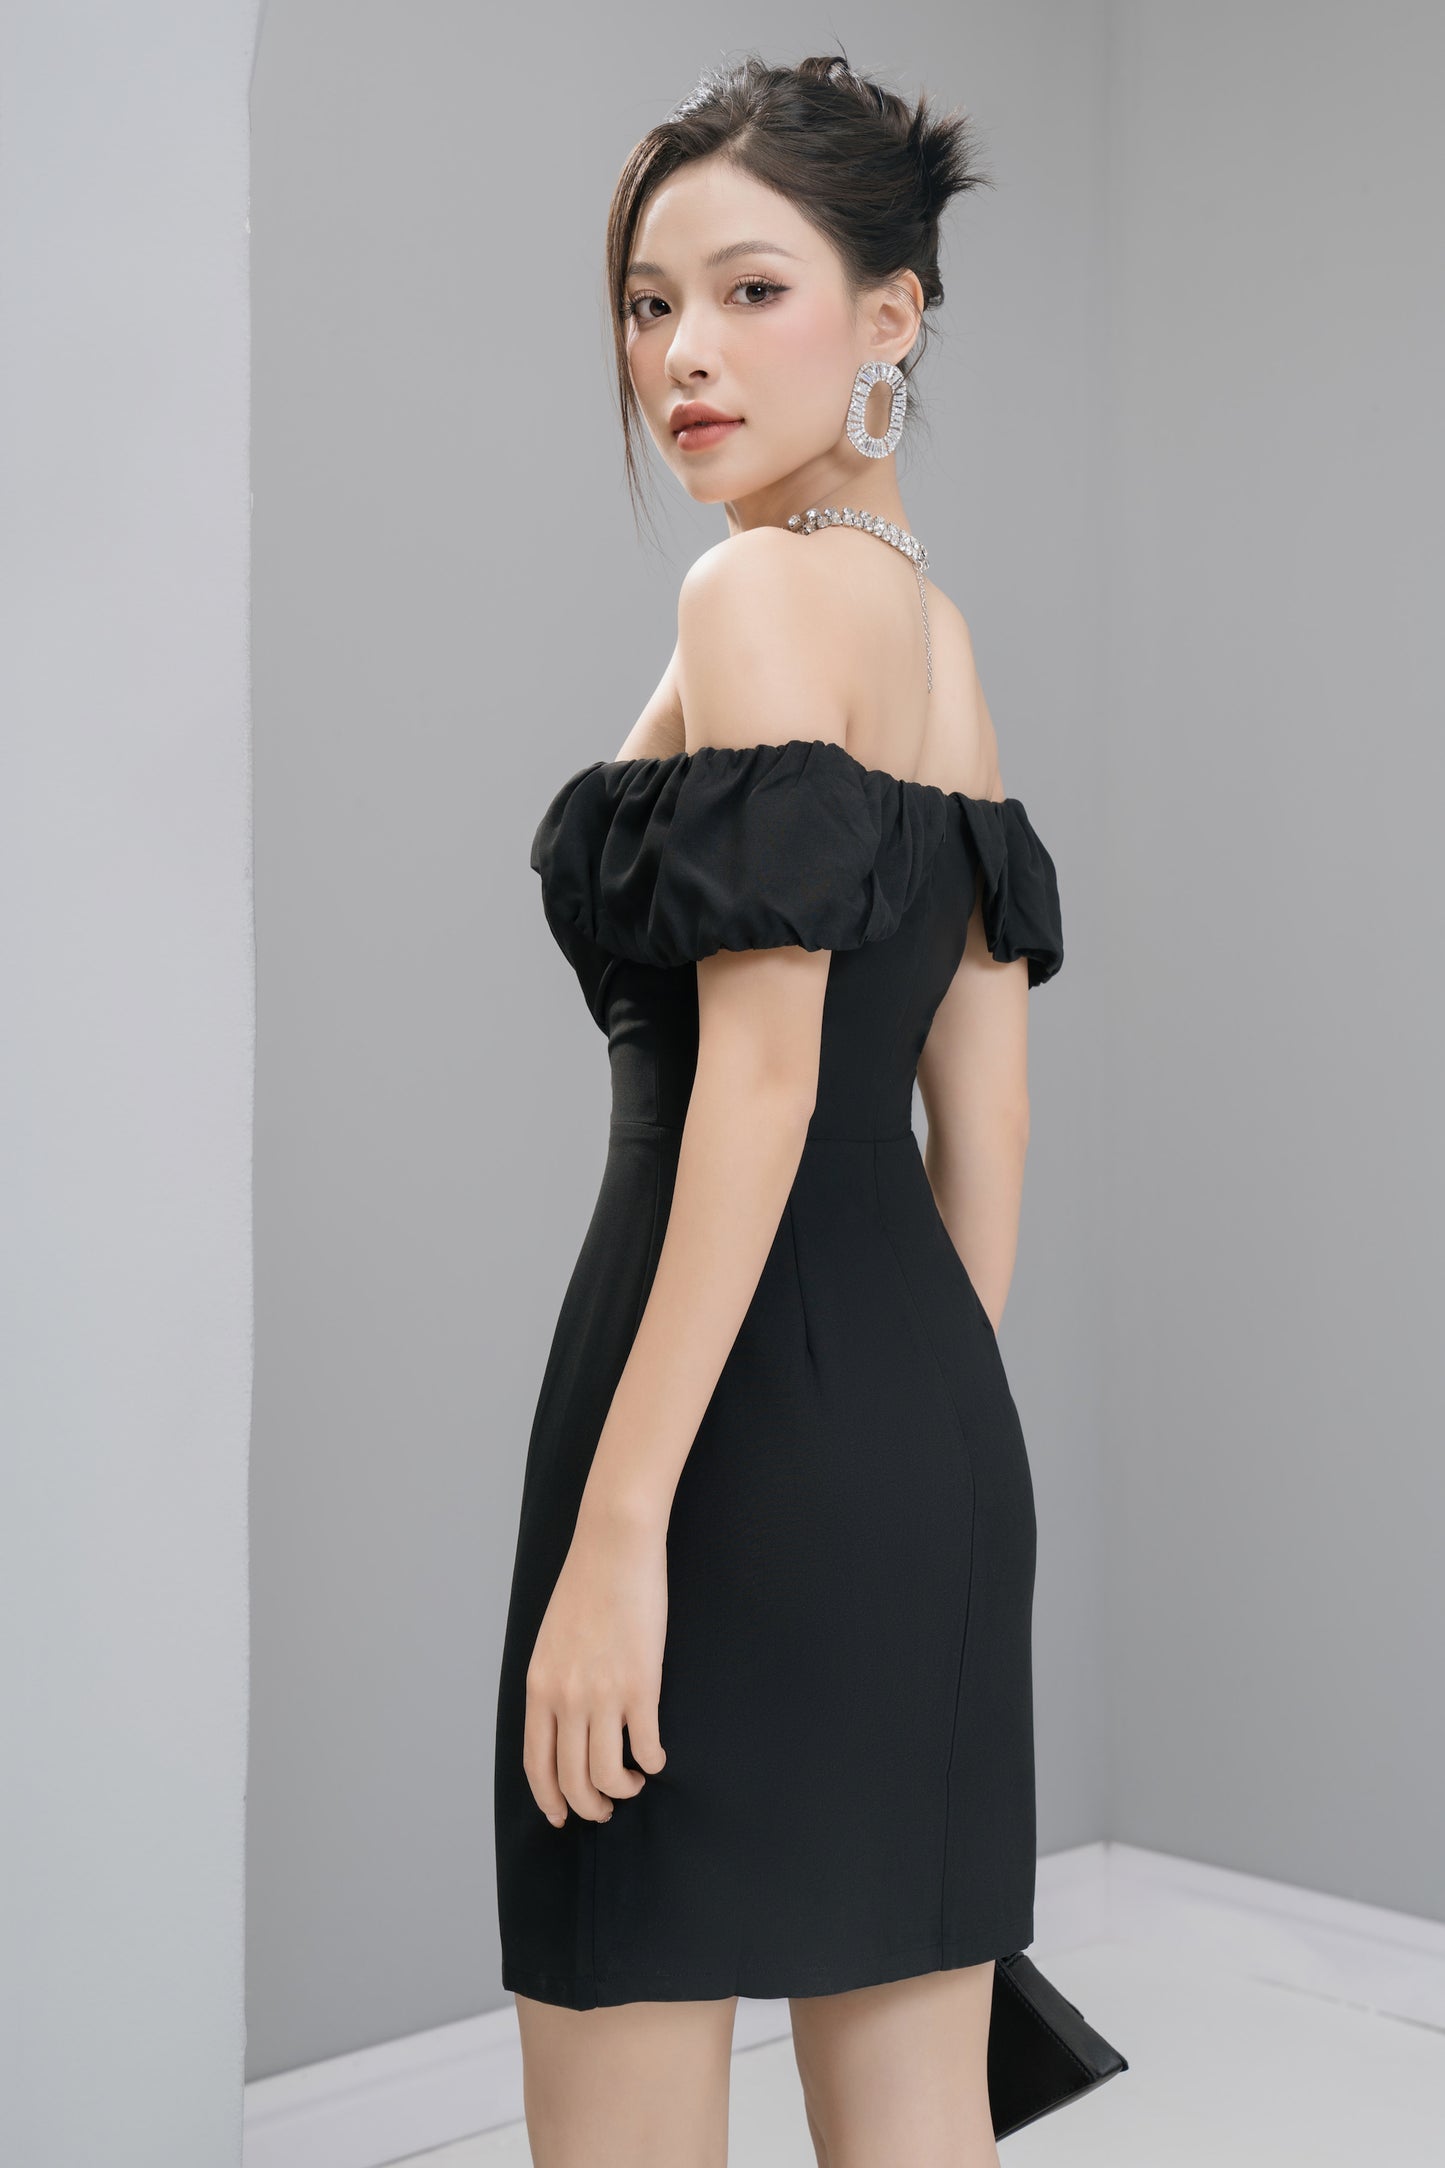 Classic Candicelia Off Shoulder Dress in Black